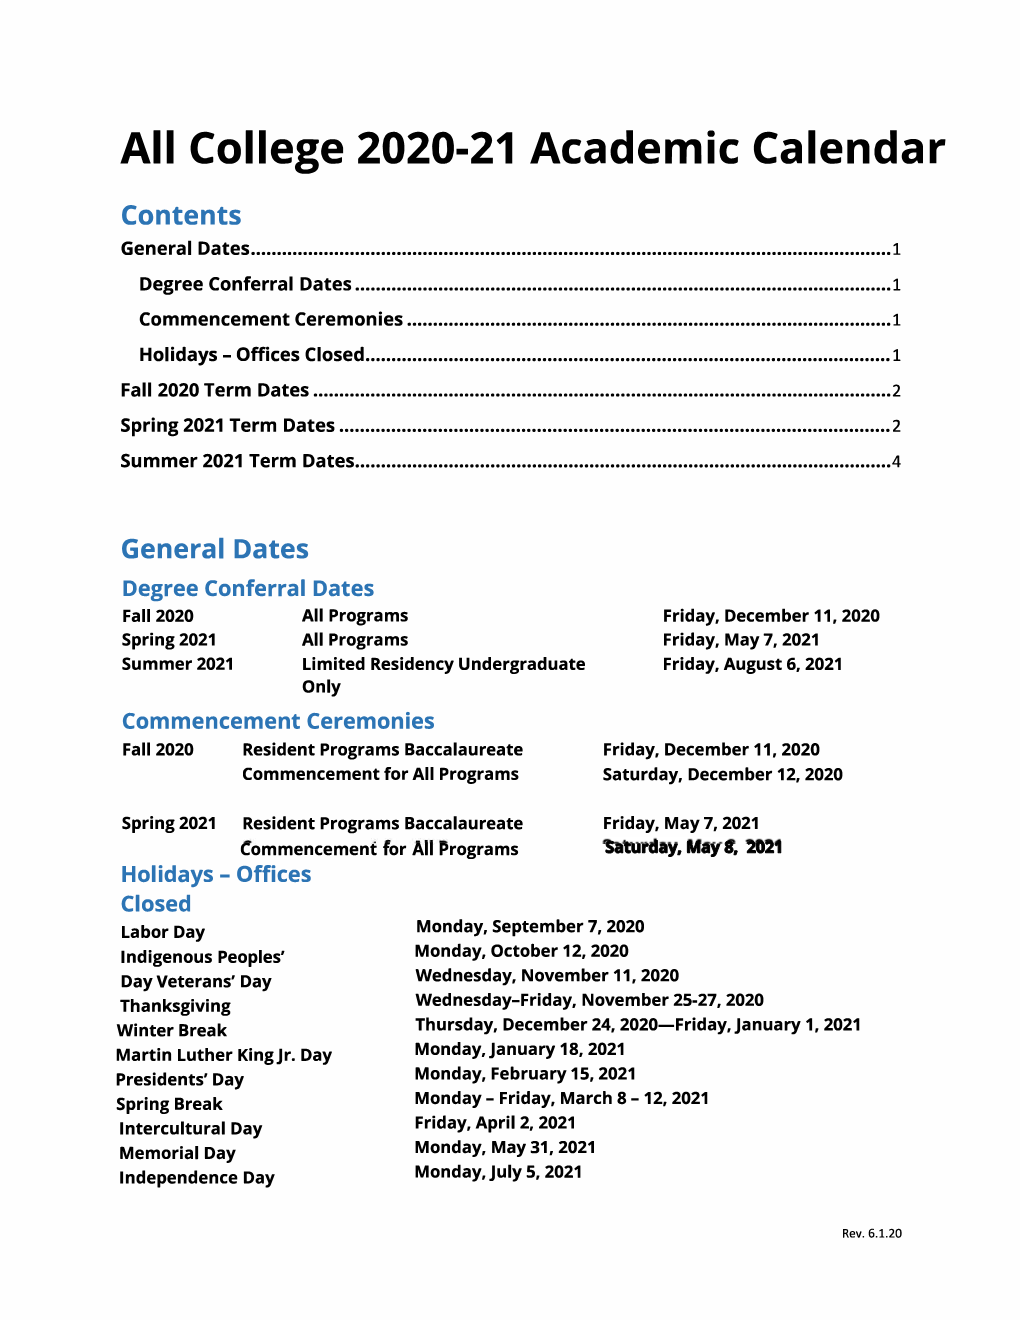 All College 2020-21 Academic Calendar